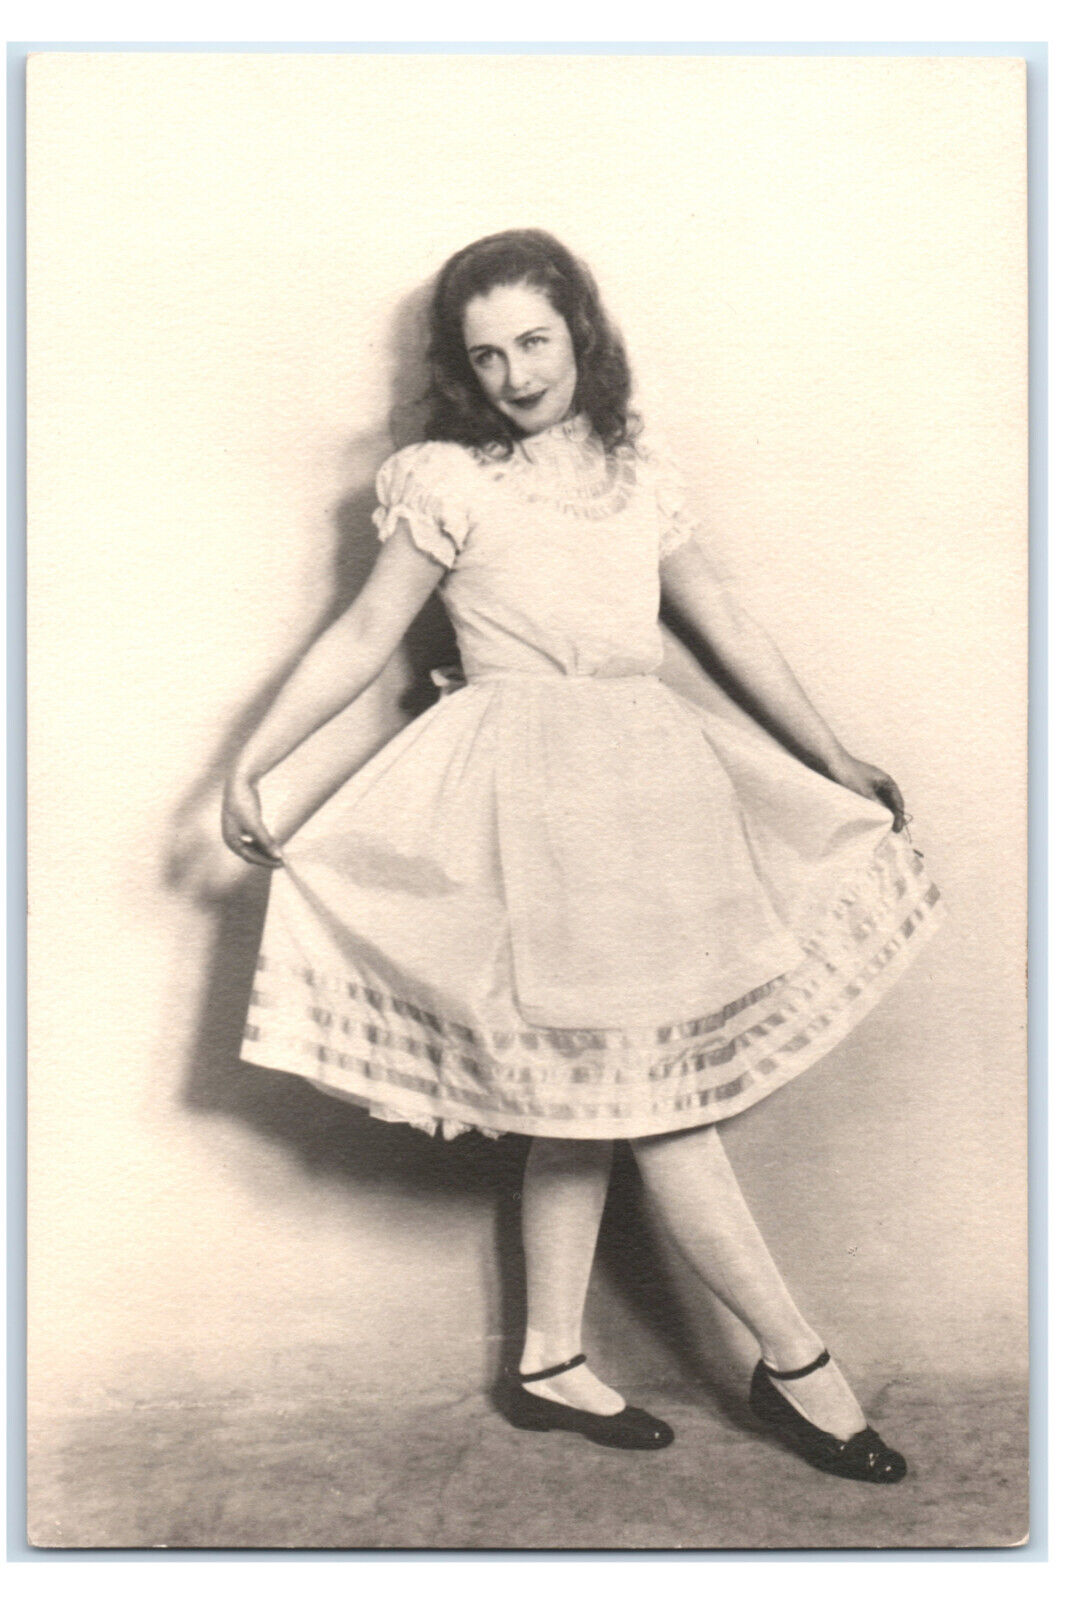 DOROTHY GISH Original 1920s Portrait Photo American Silent Era Actress